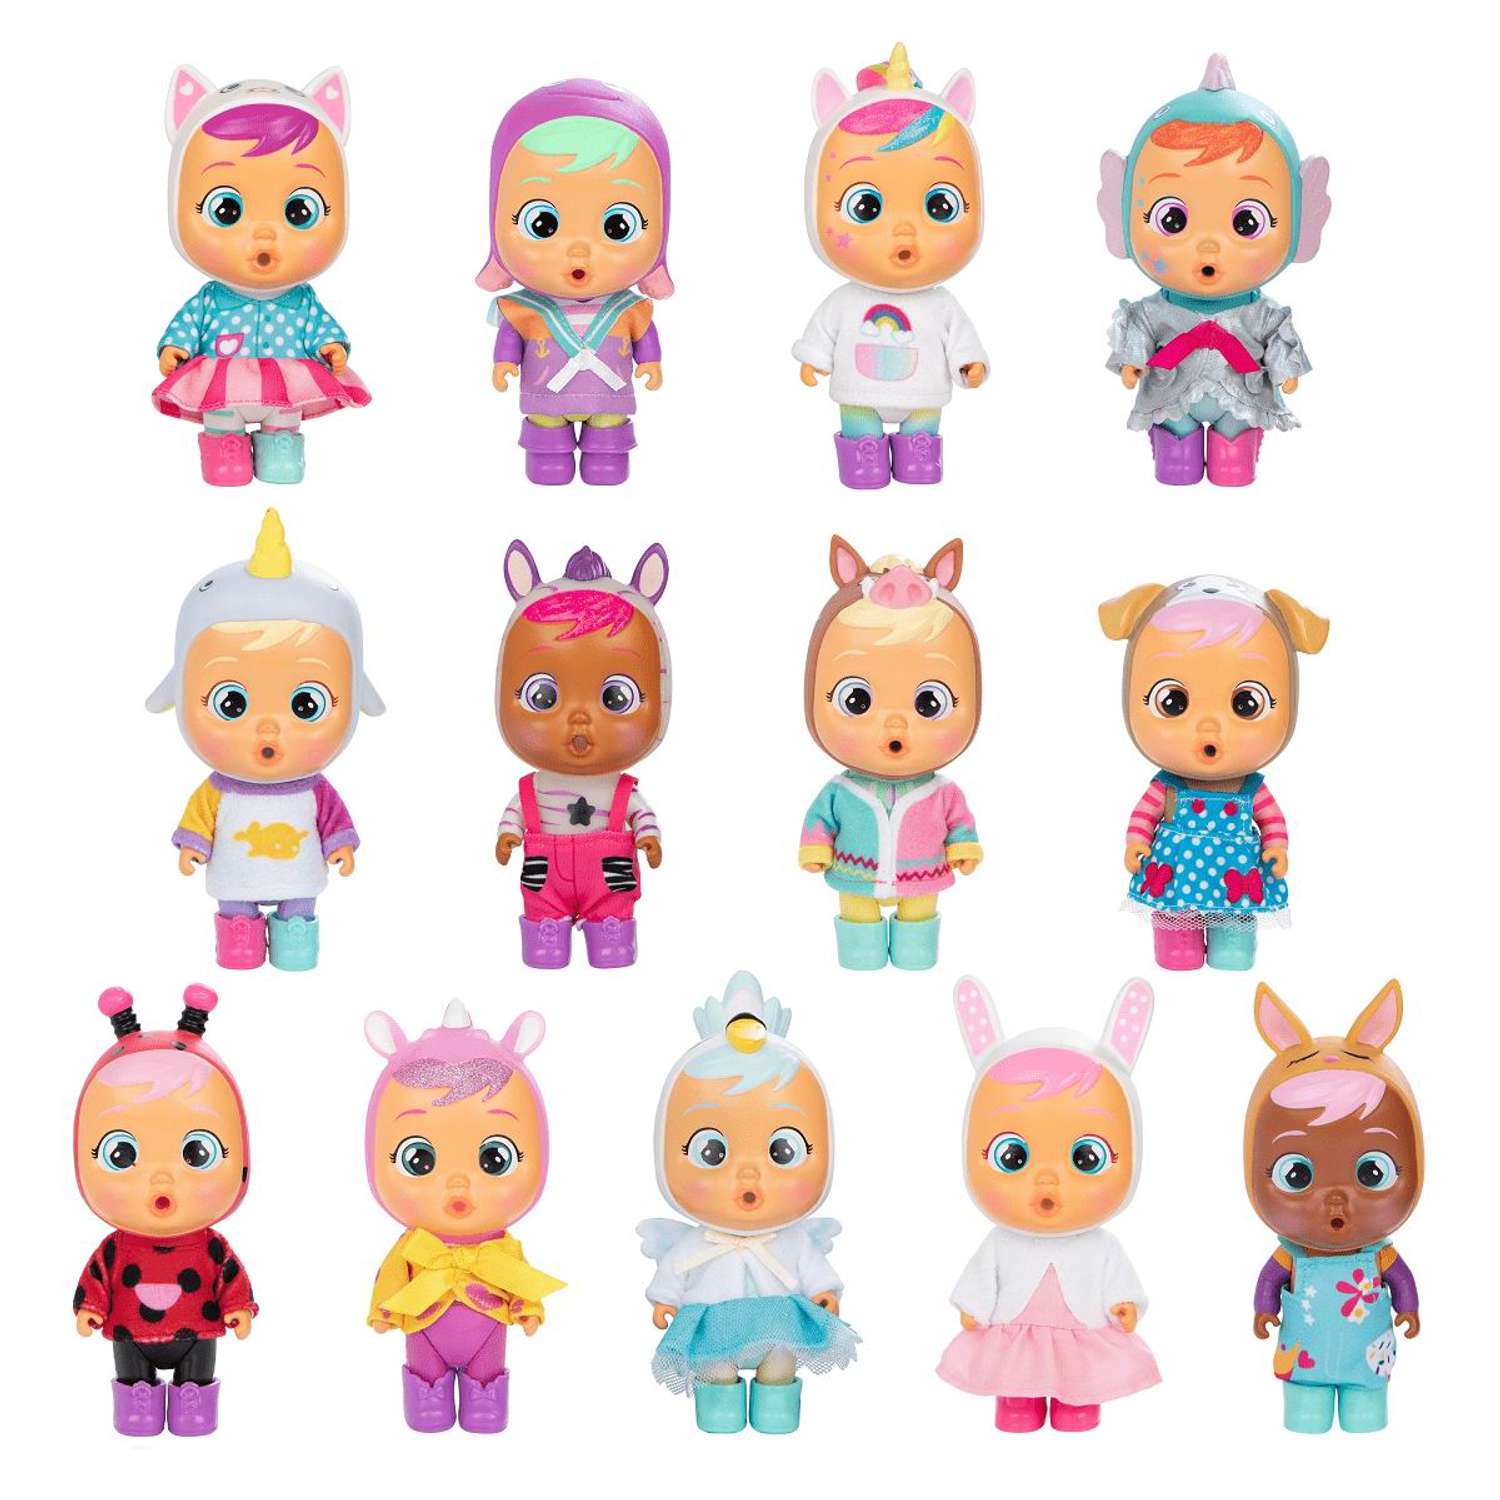 Кукла Cry Babies Magic Tears IMC Toys Плачущий младенец серия DRESS ME UP в комплекте с домиком и аксессуарами 81970 - фото 4